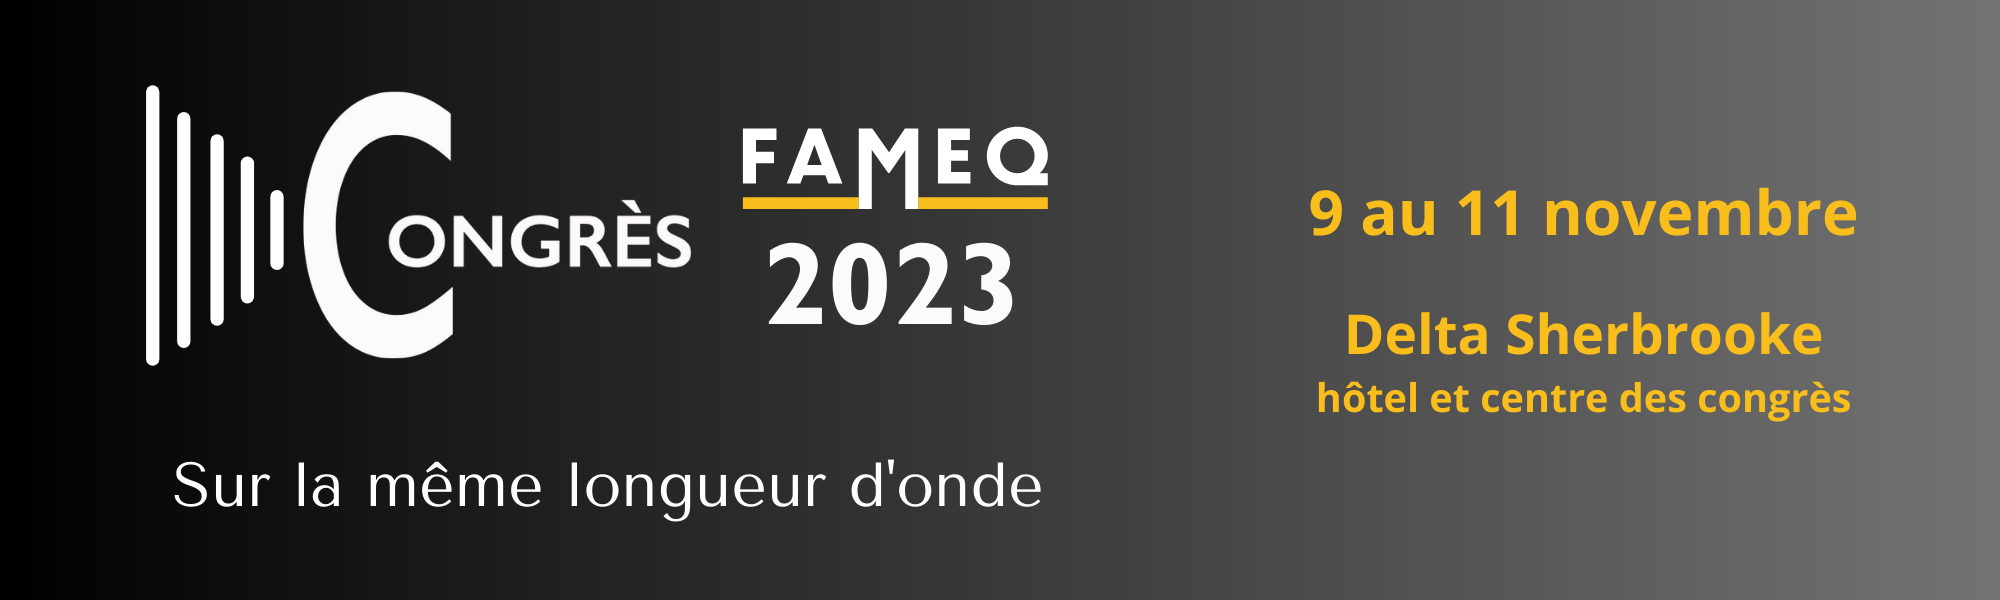 Congrès FAMEQ 2023